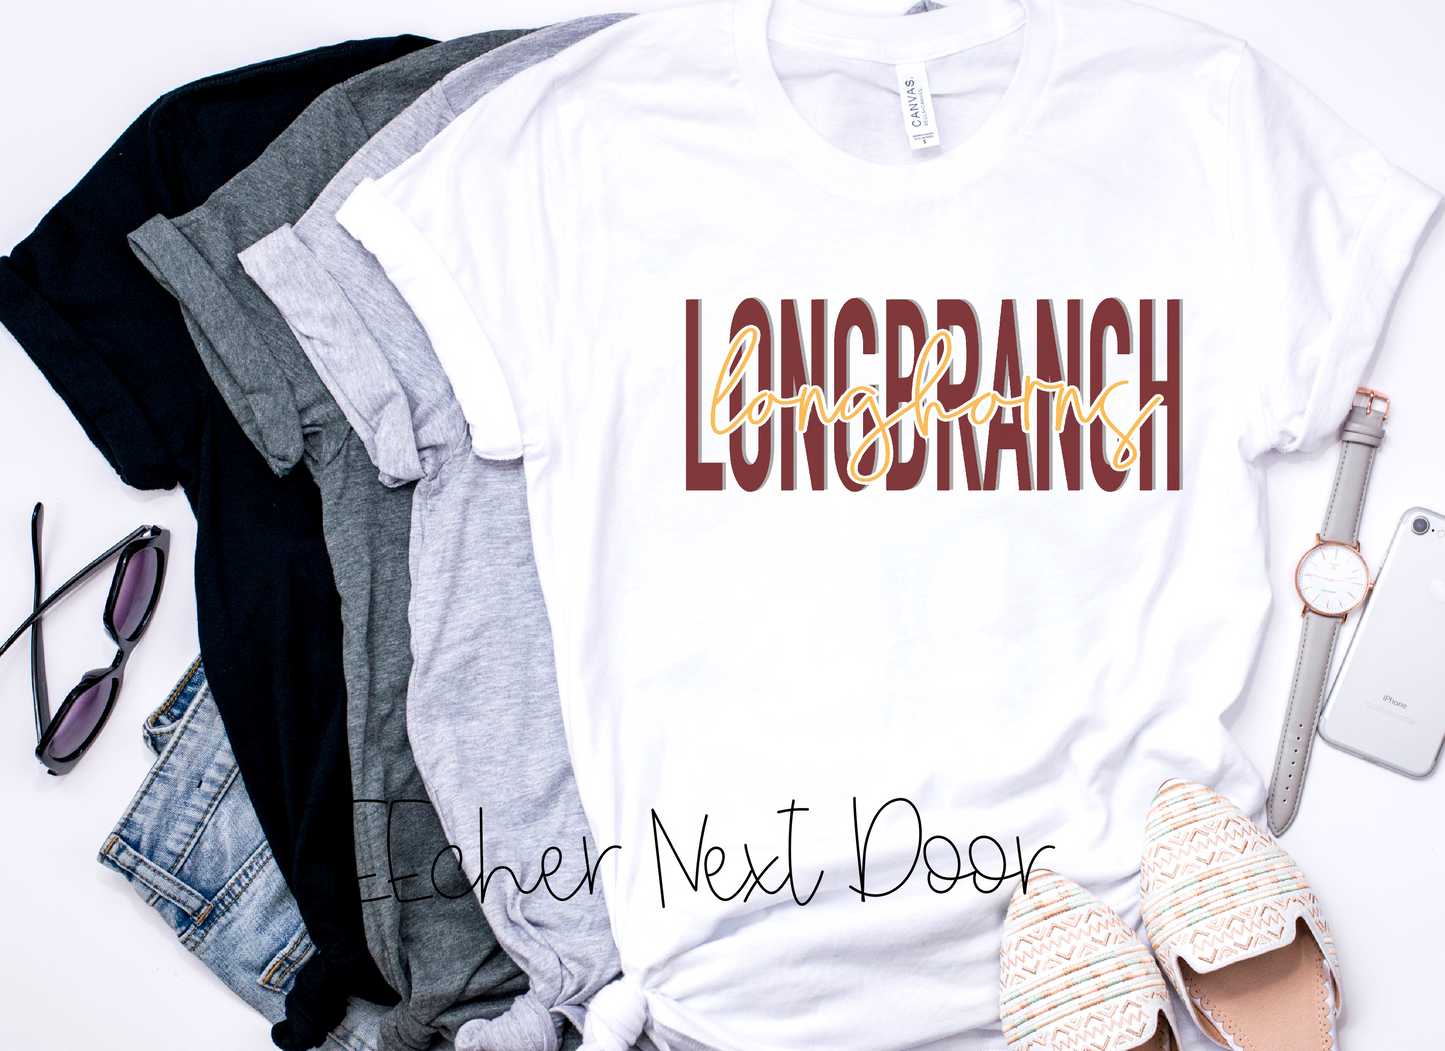 Longhorn Spirit Wear